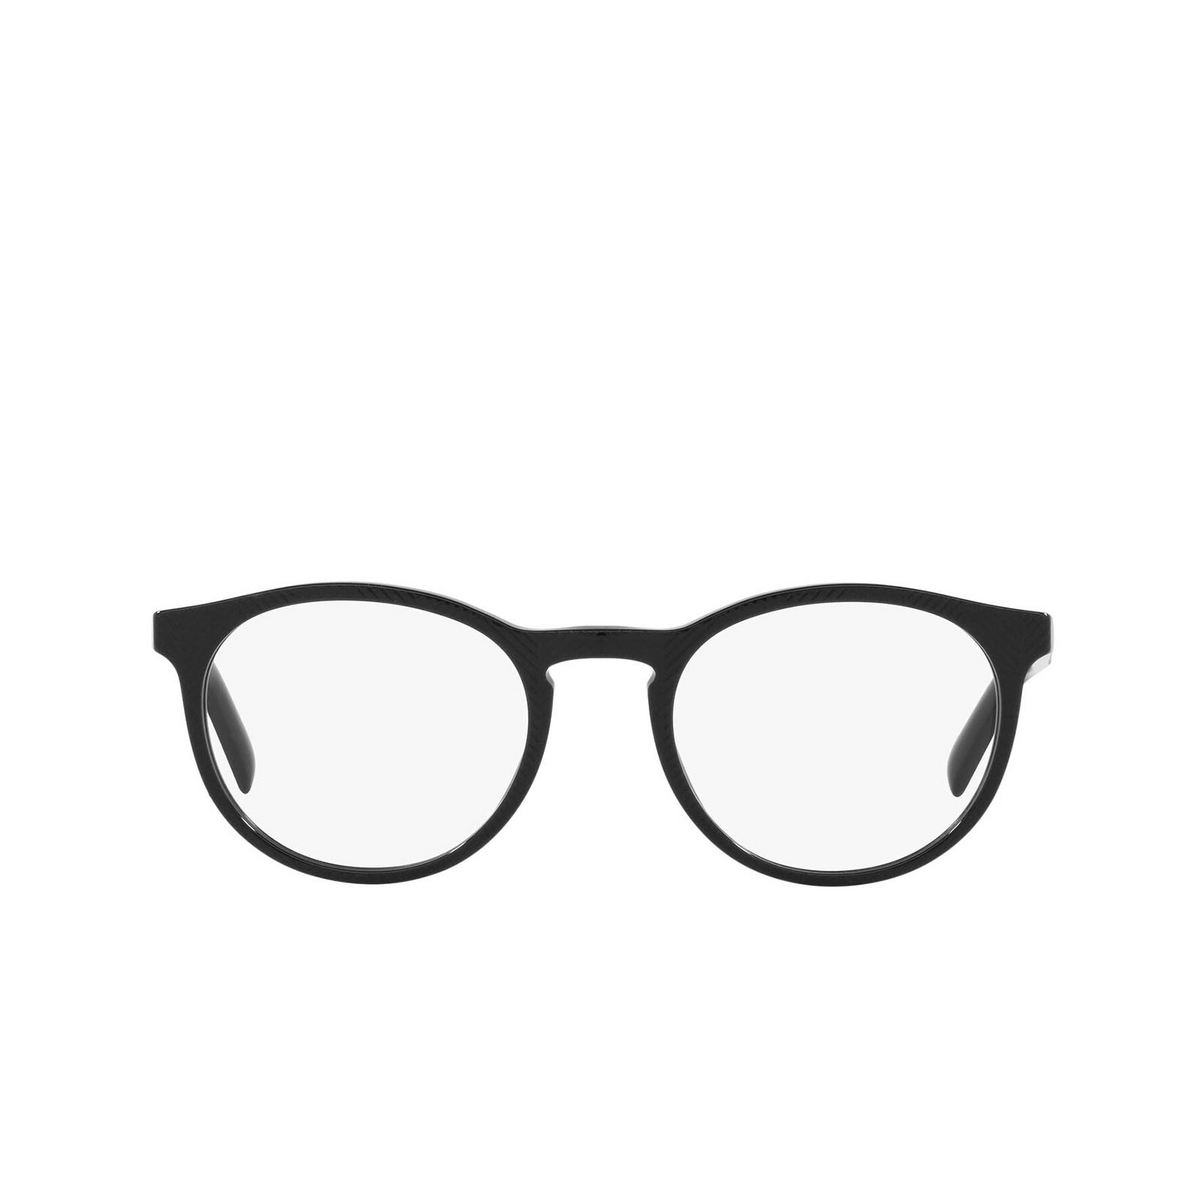 Dolce & Gabbana® Round Eyeglasses: DG3309 color Nero Texture Spigato 3298 - 1/3.